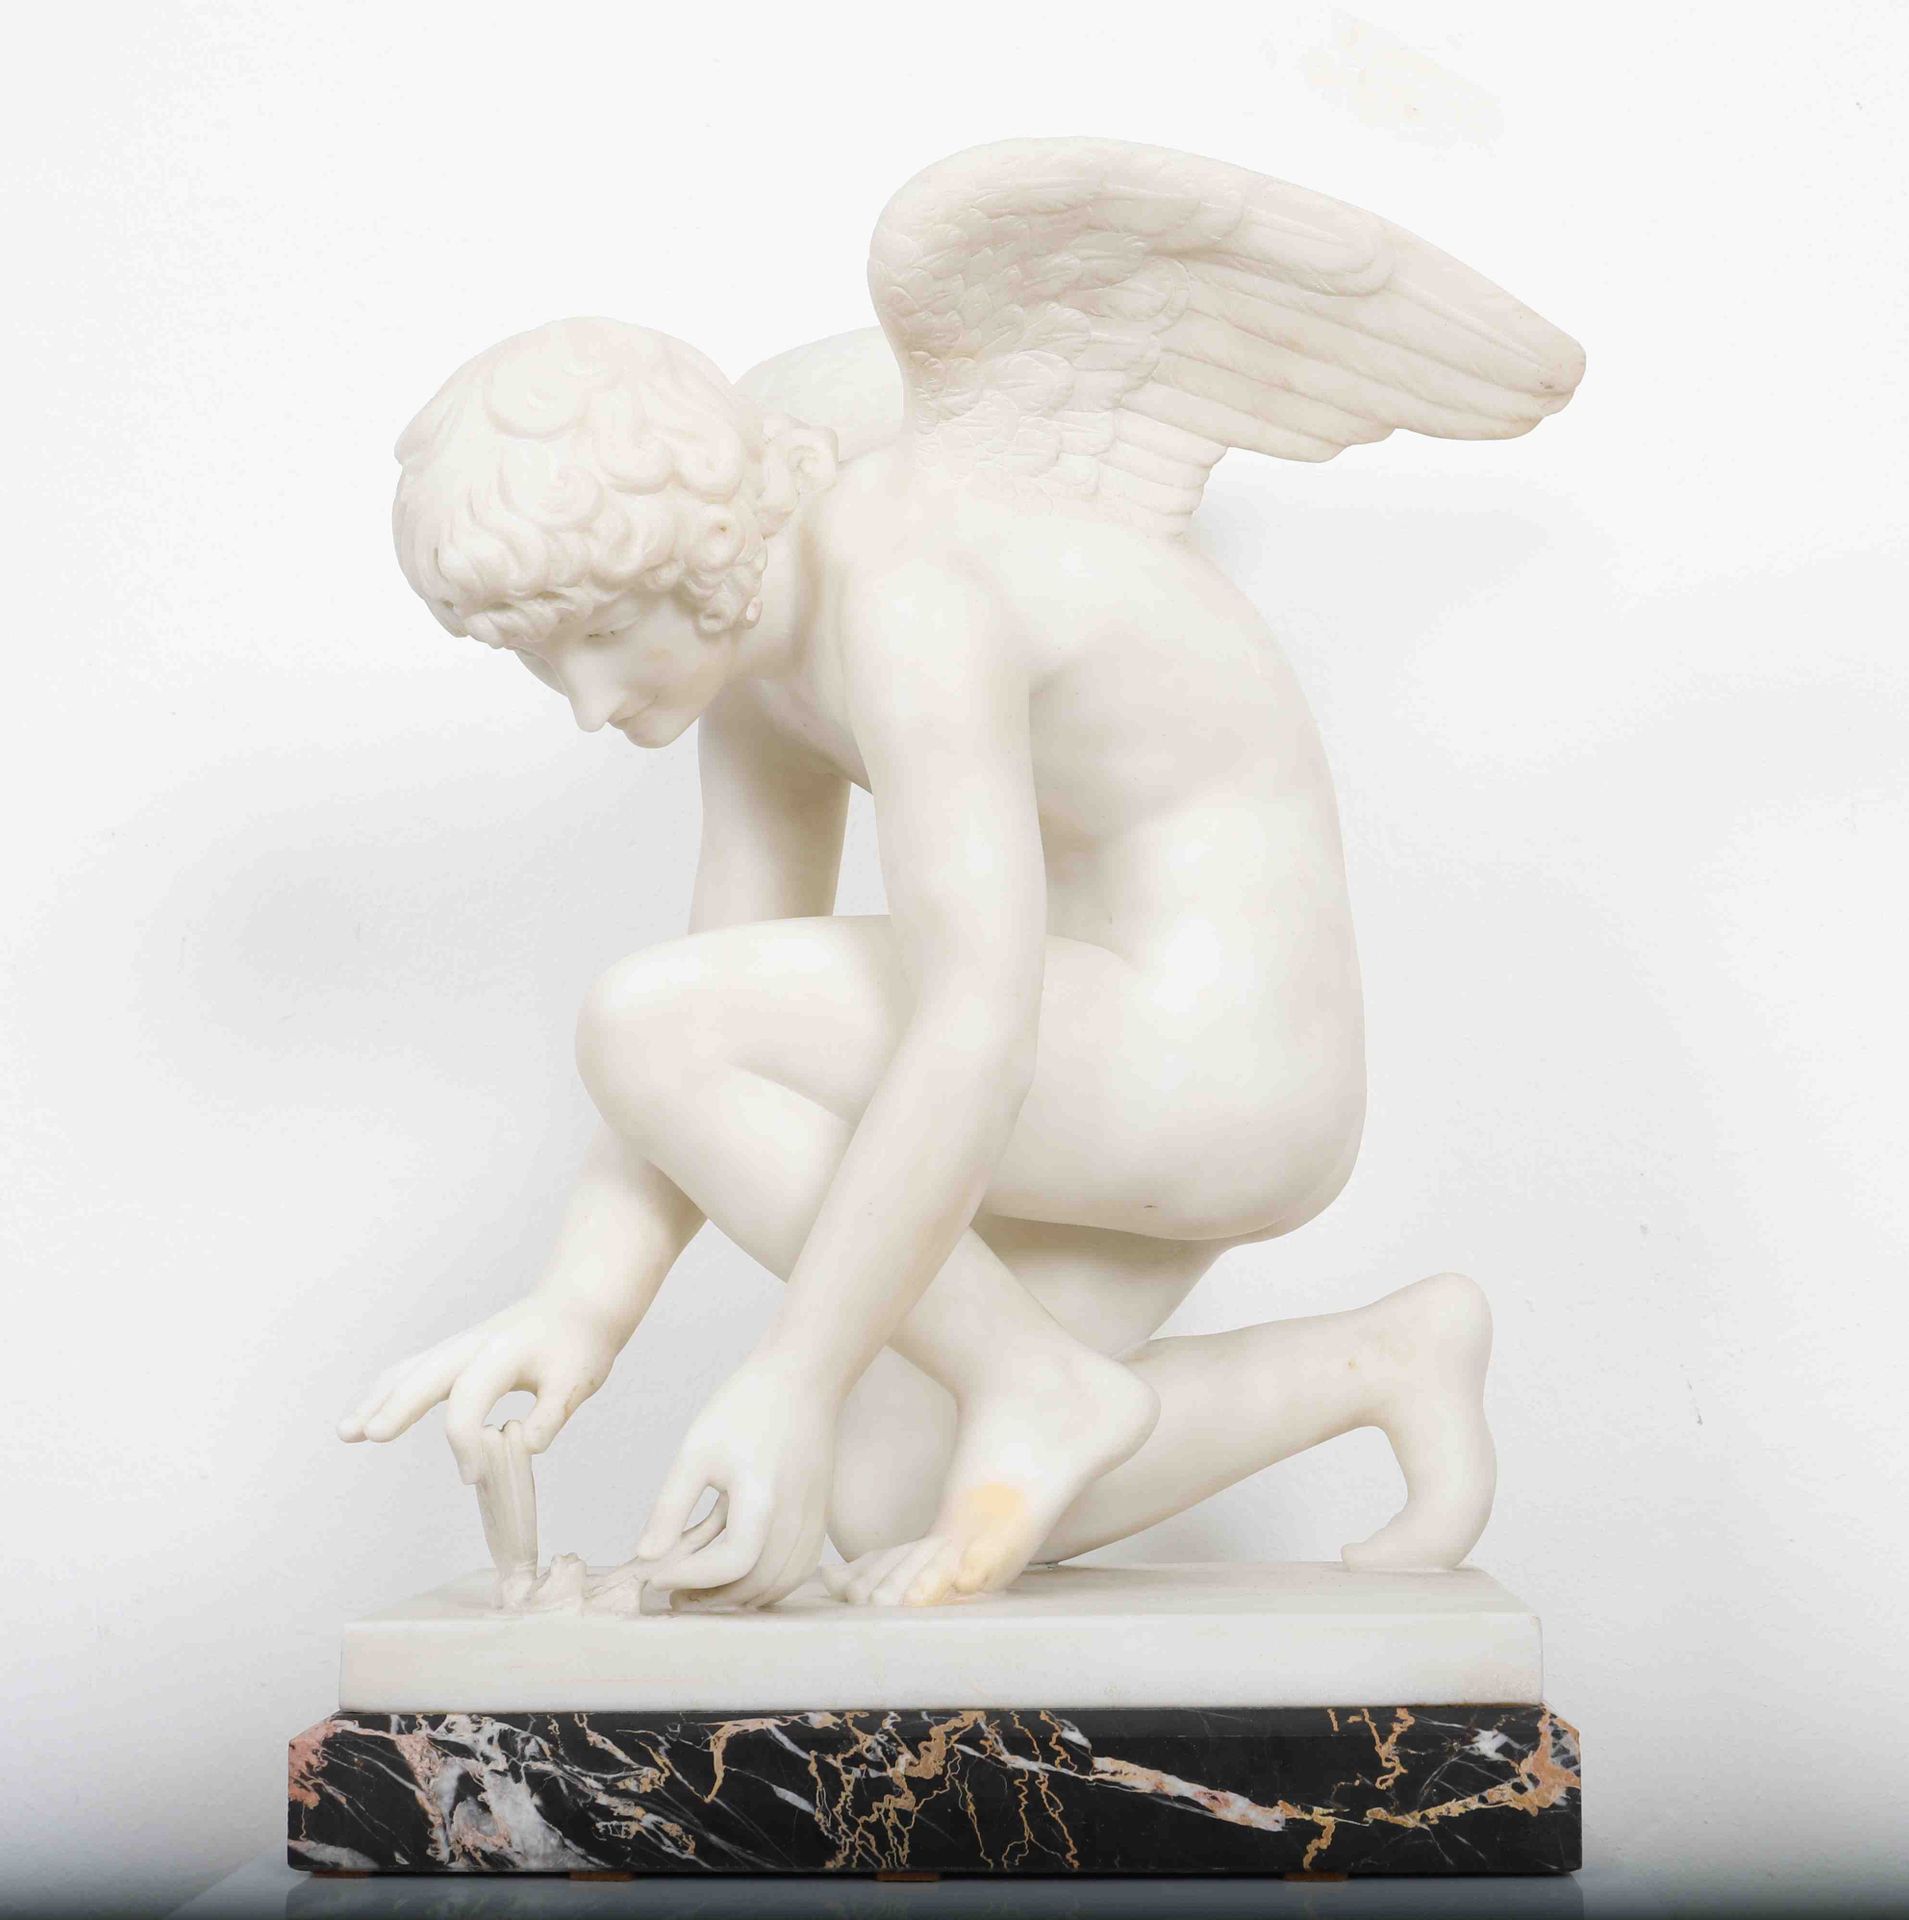 Null "L'amour au papillon" Modell von Antoine Denis Chaudet (1763-1810).
Skulptu&hellip;